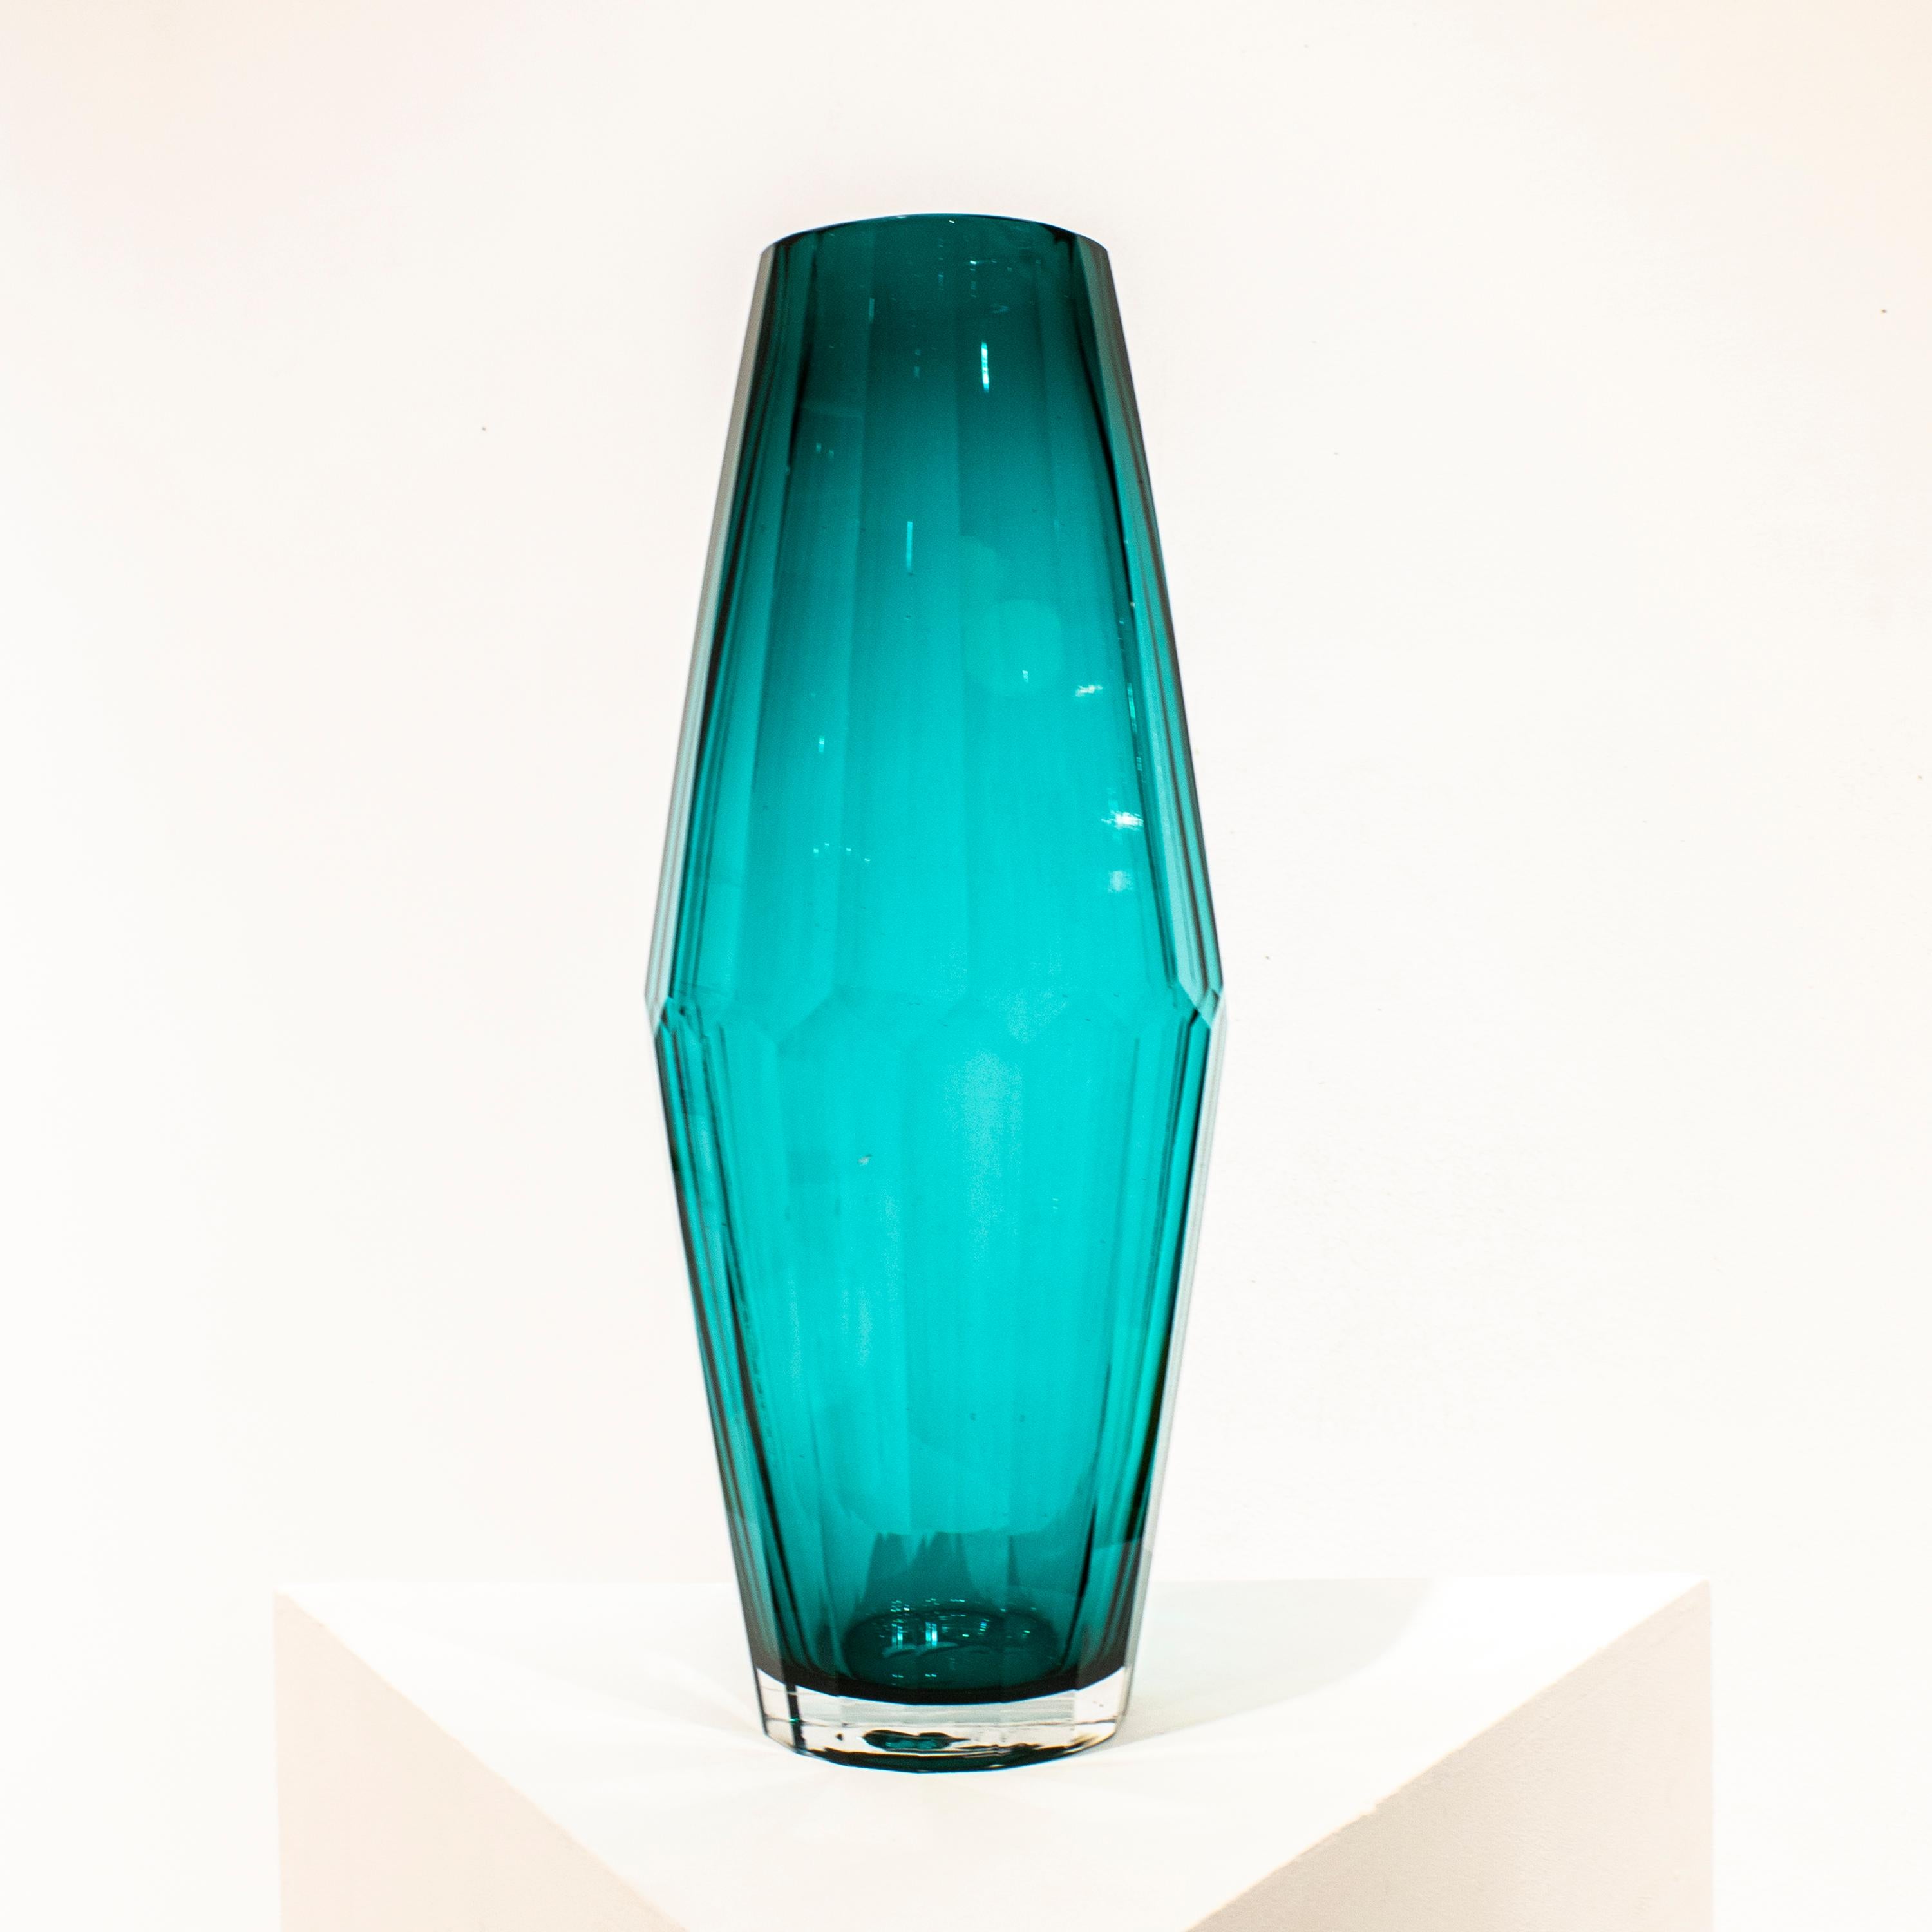 Vase aus mundgeblasenem italienischem, blauem, halbtransparentem Glas mit facettierter Form.